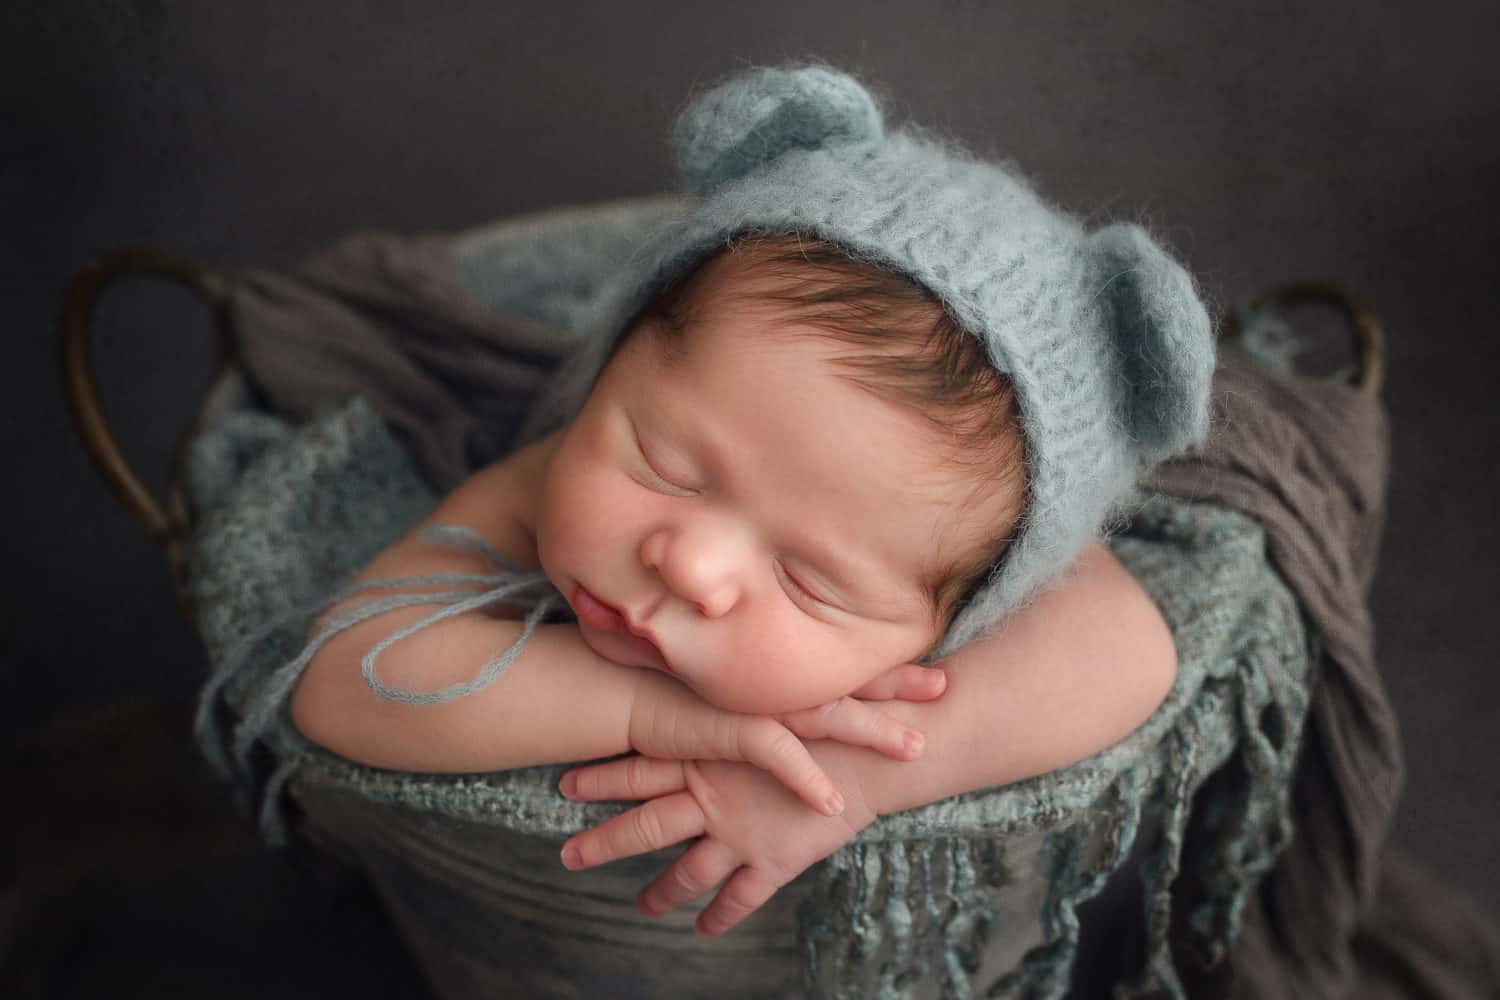 asleep newborn baby resting on his hands wearing an blue teddy ear hat